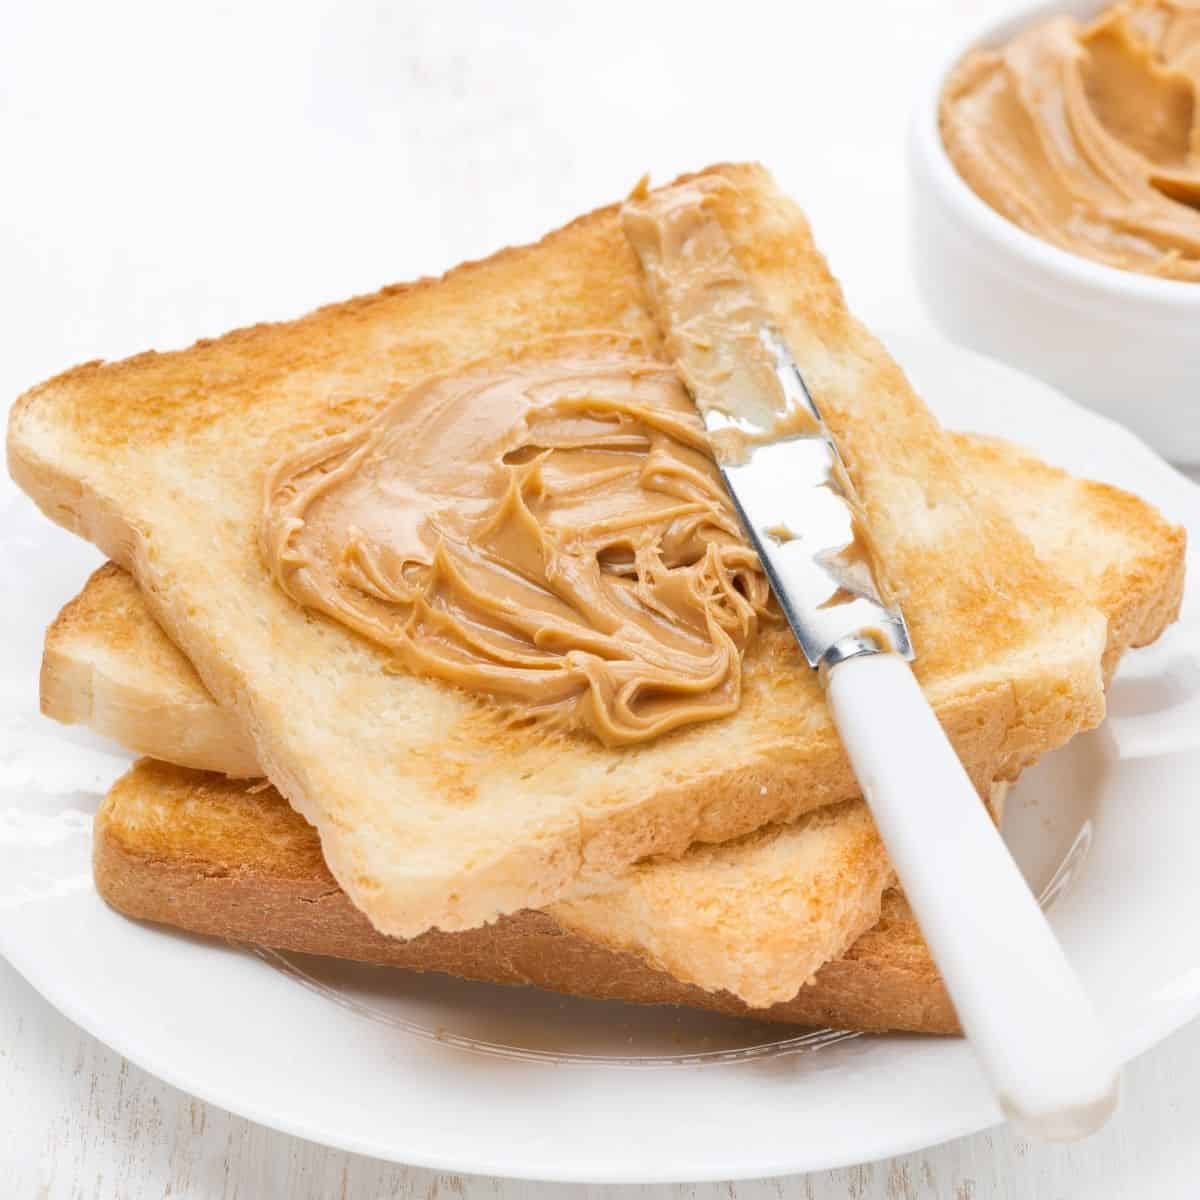 21 Tasty Peanut Butter Snacks That Go Beyond Sandwiches